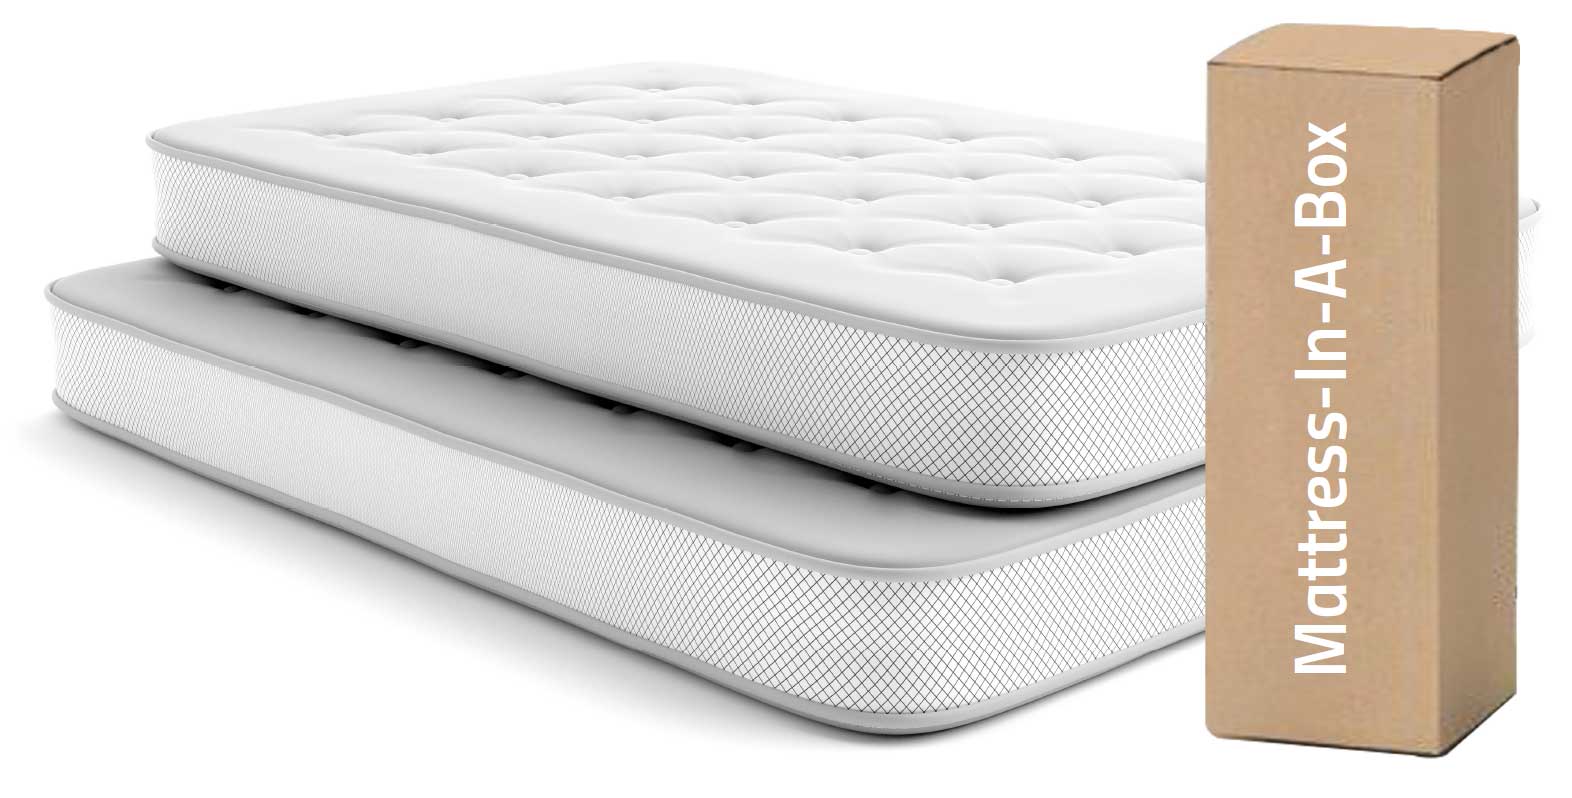 mattress in a box startup